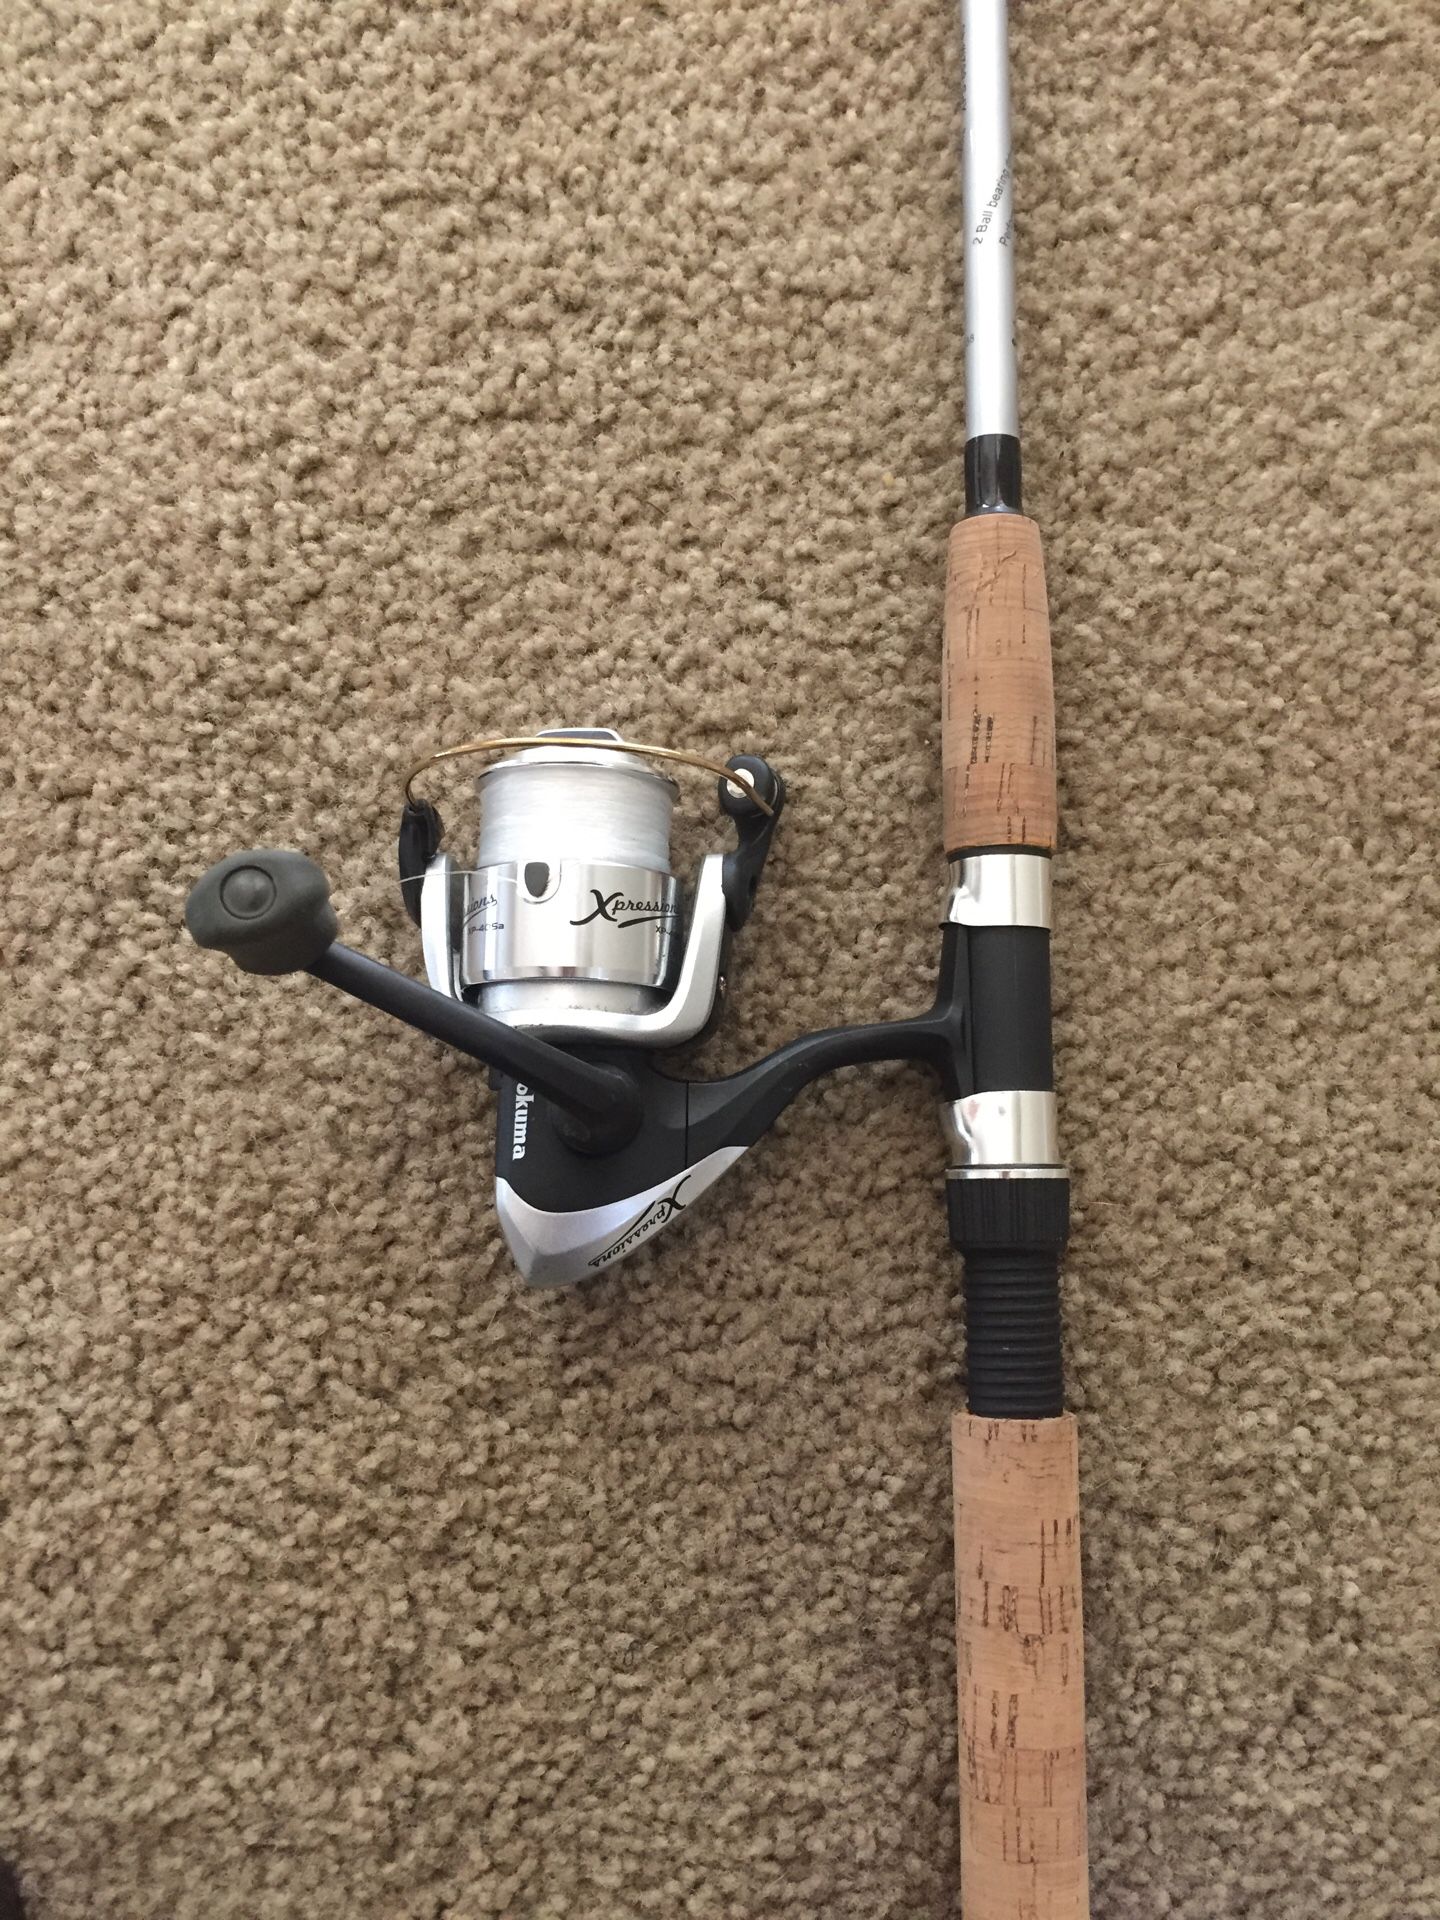 Okuma Xpressions Fishing Rod and Reel Combo